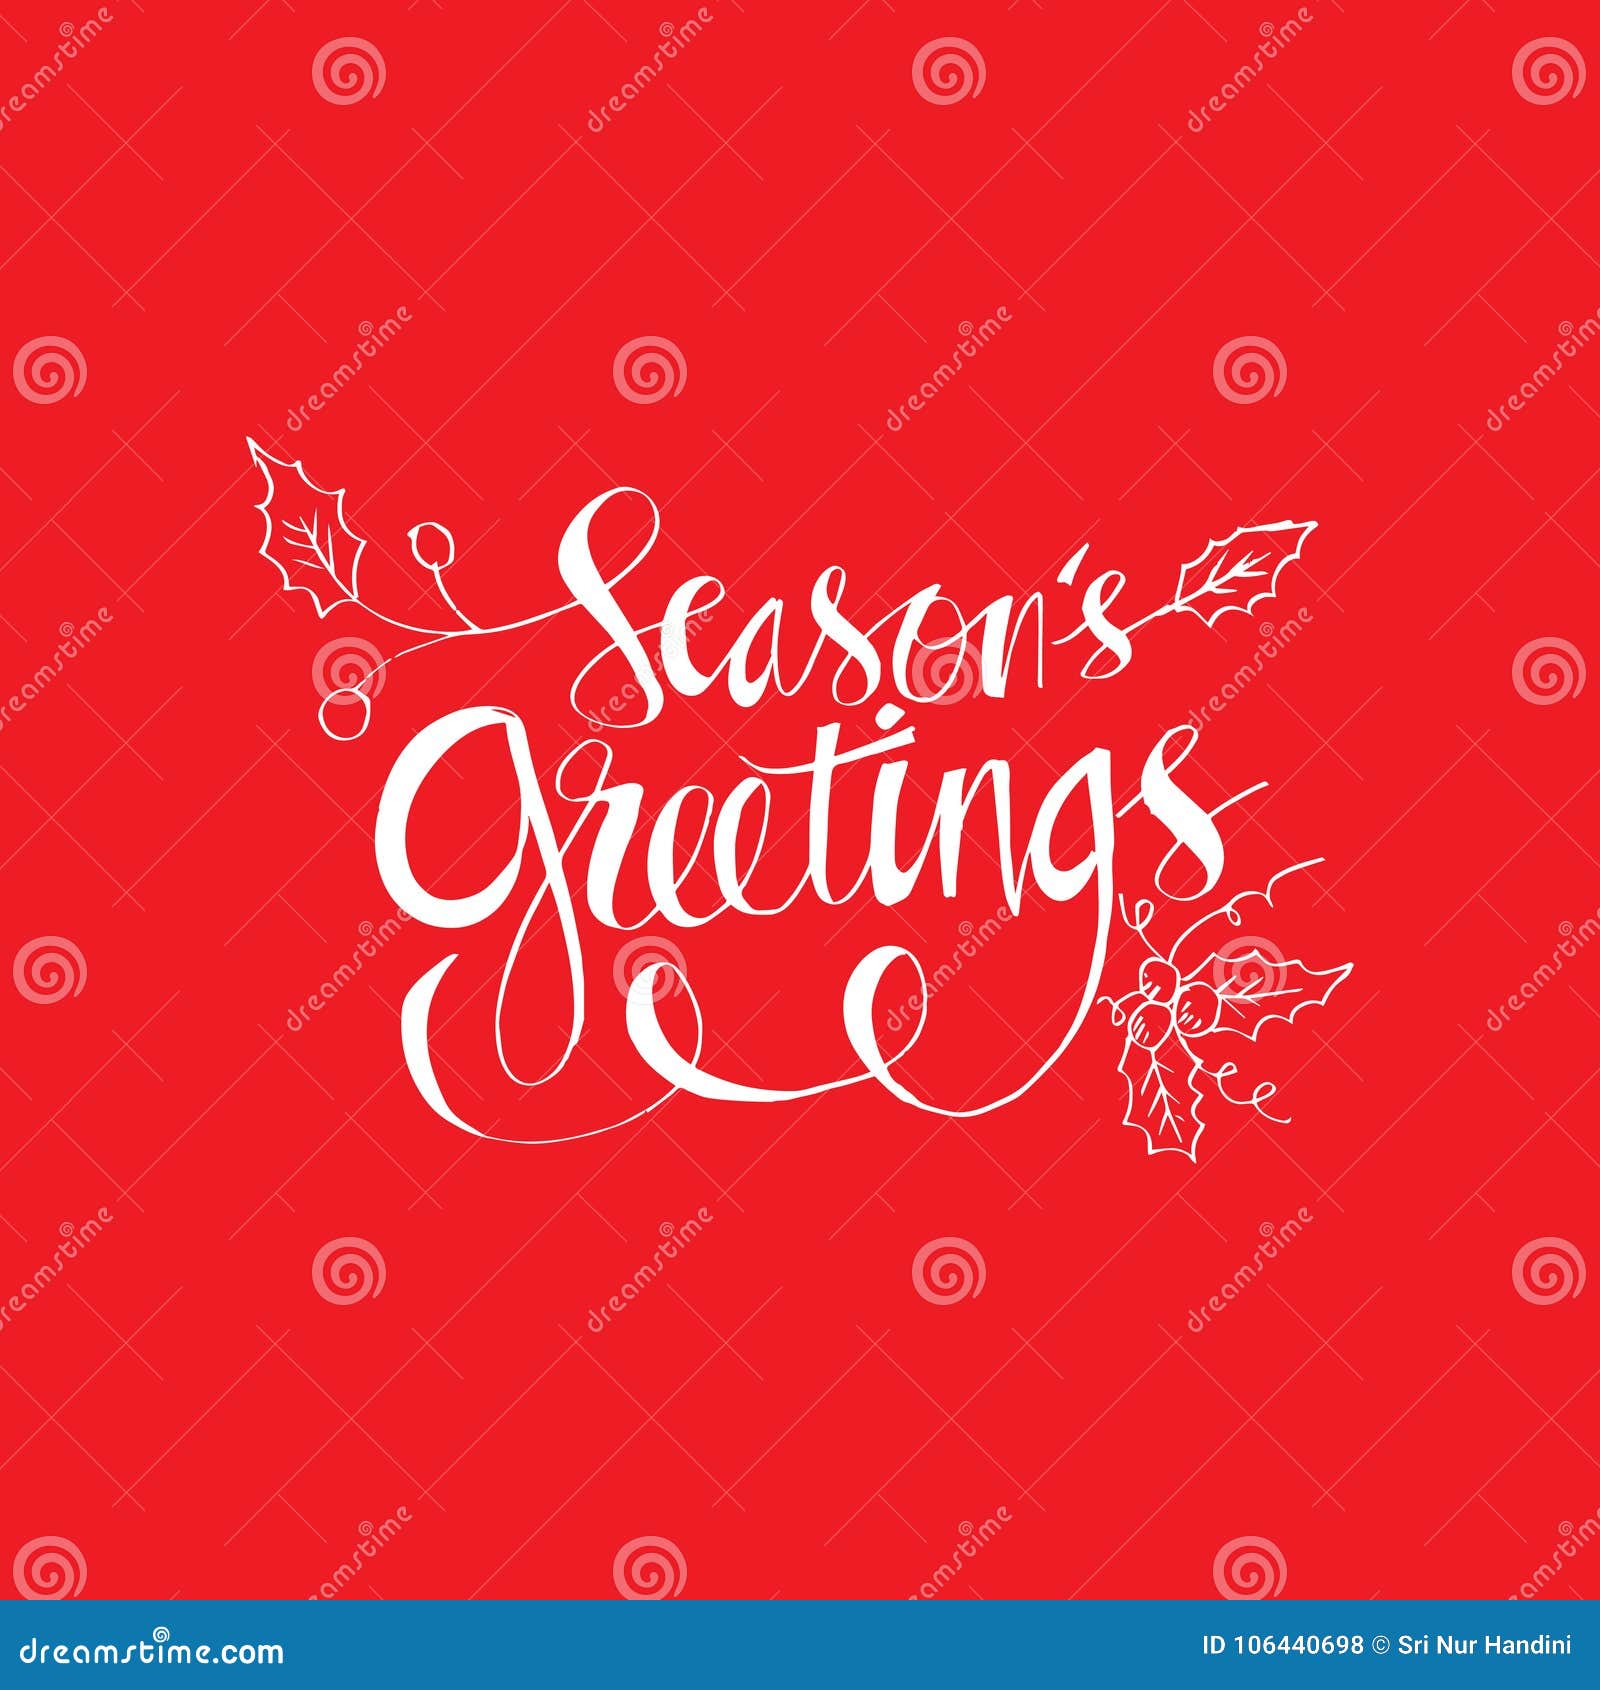 seasons greetings hand written lettering